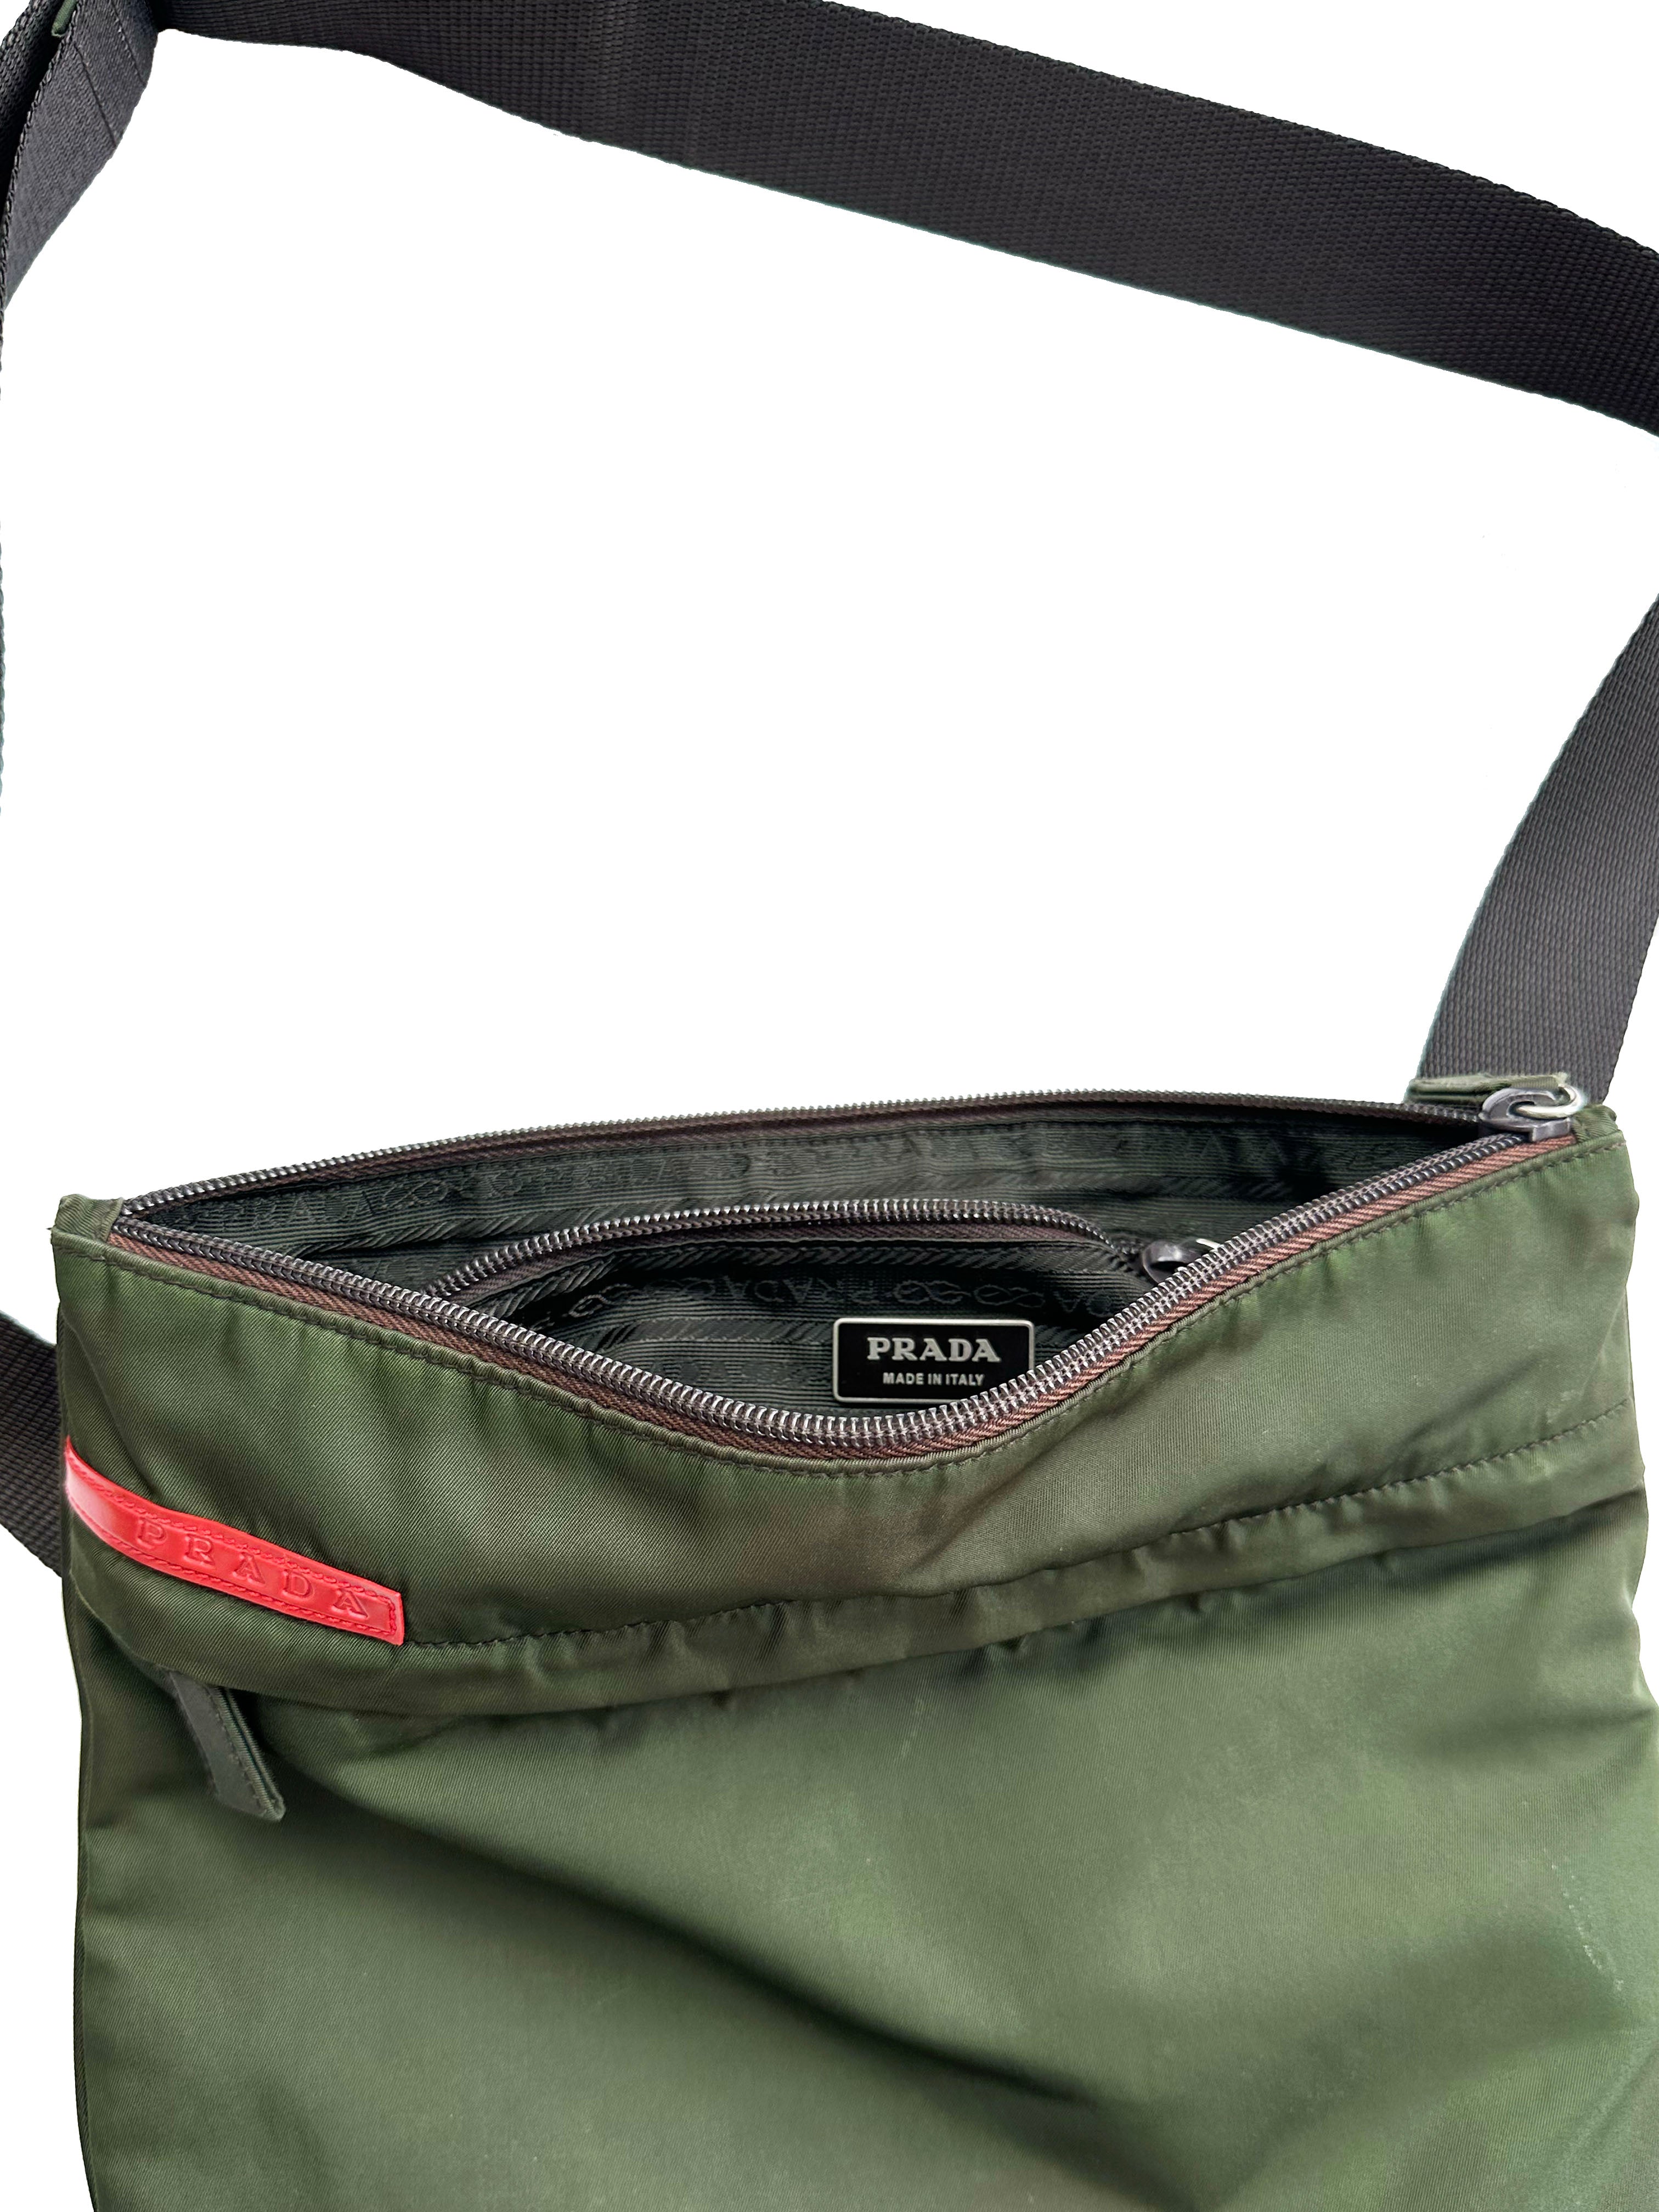 Prada Sport Green Side Bag 00's